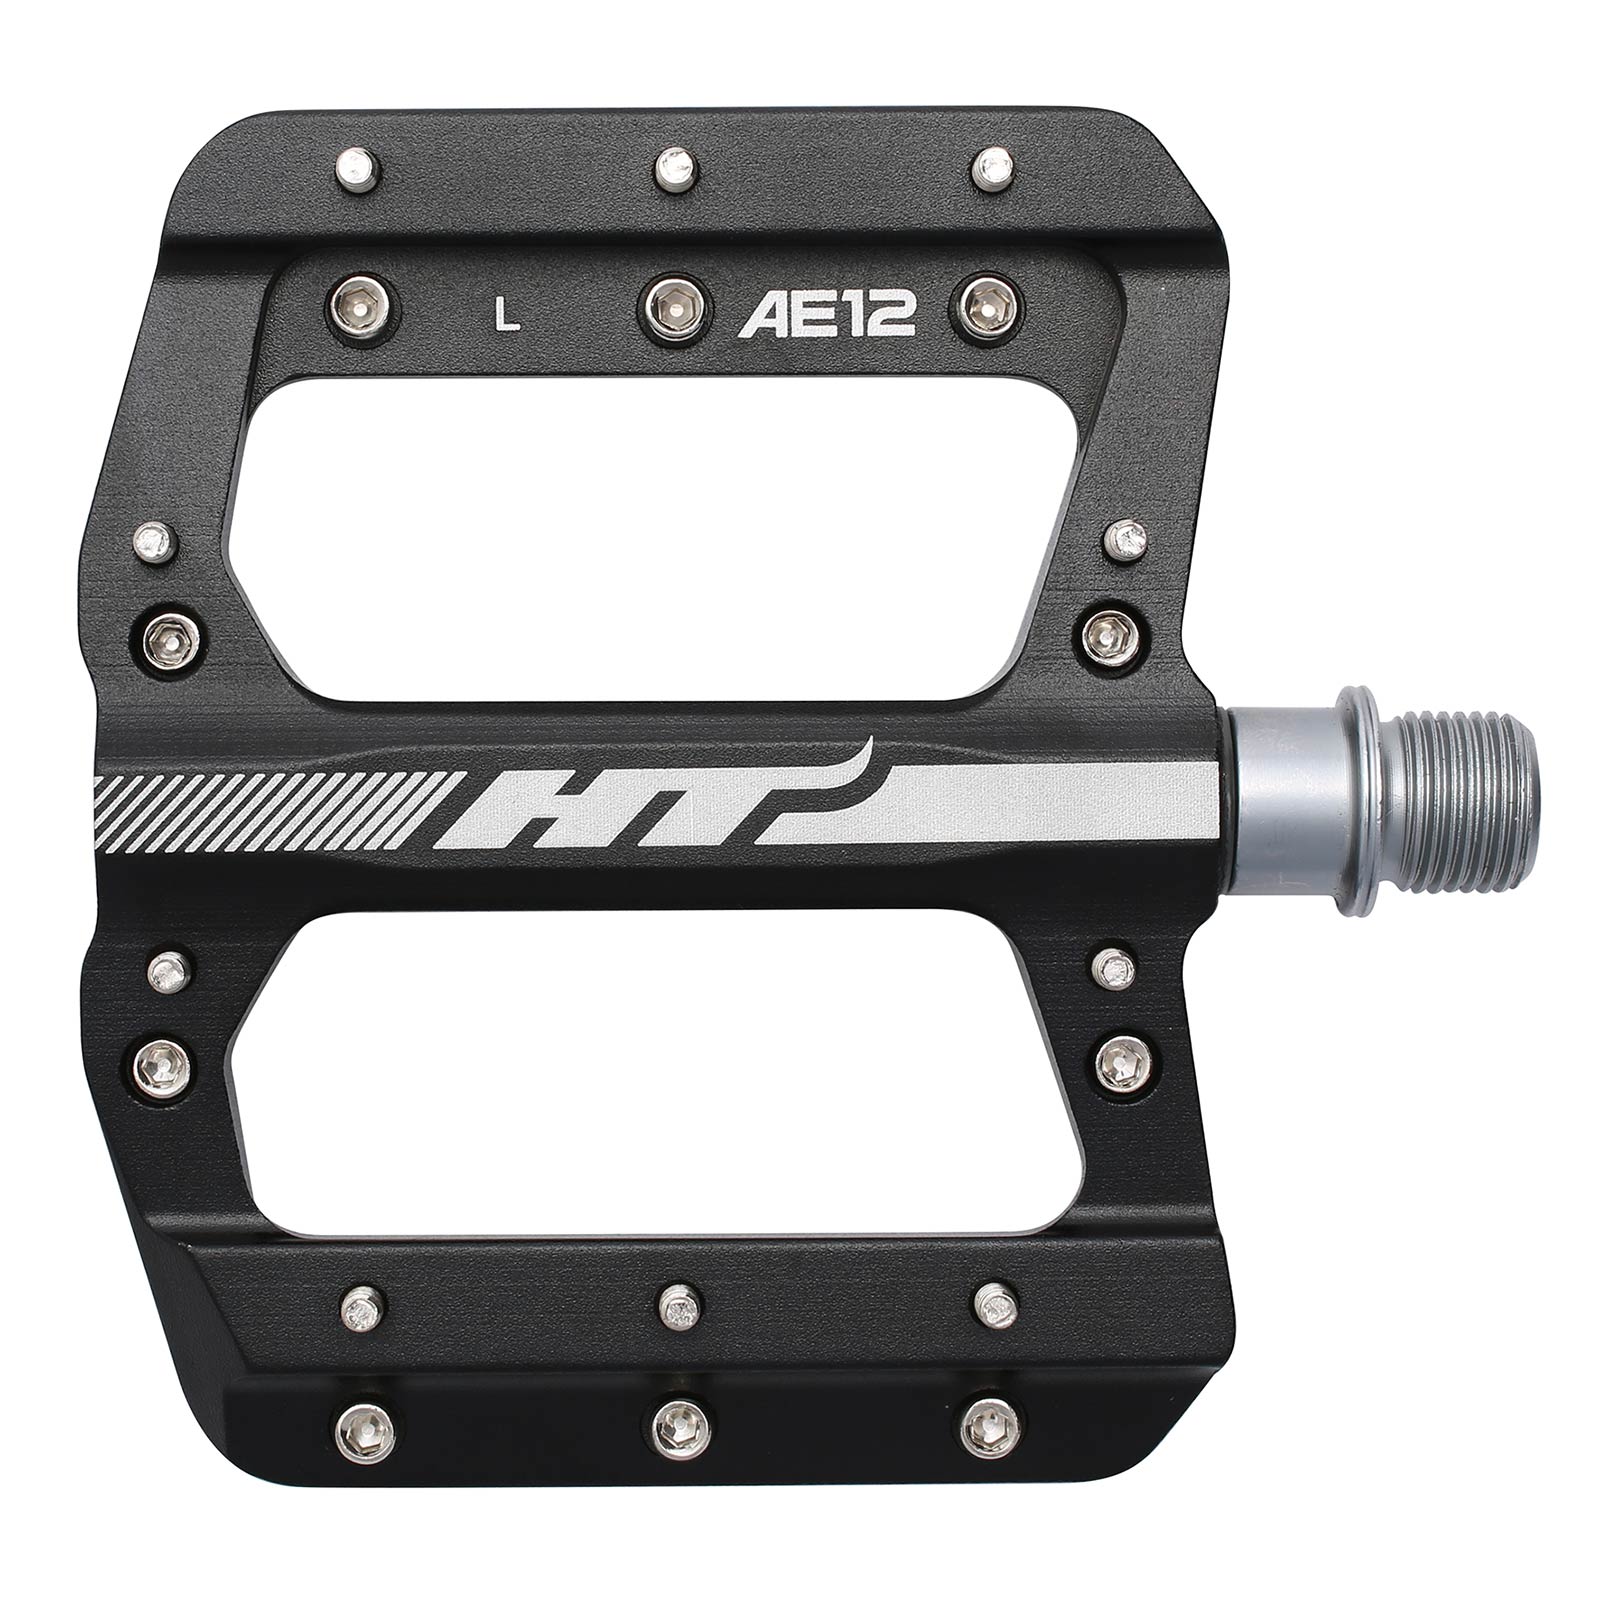 Ht AE12 Pedals Alloy / CNC CRMO - Black